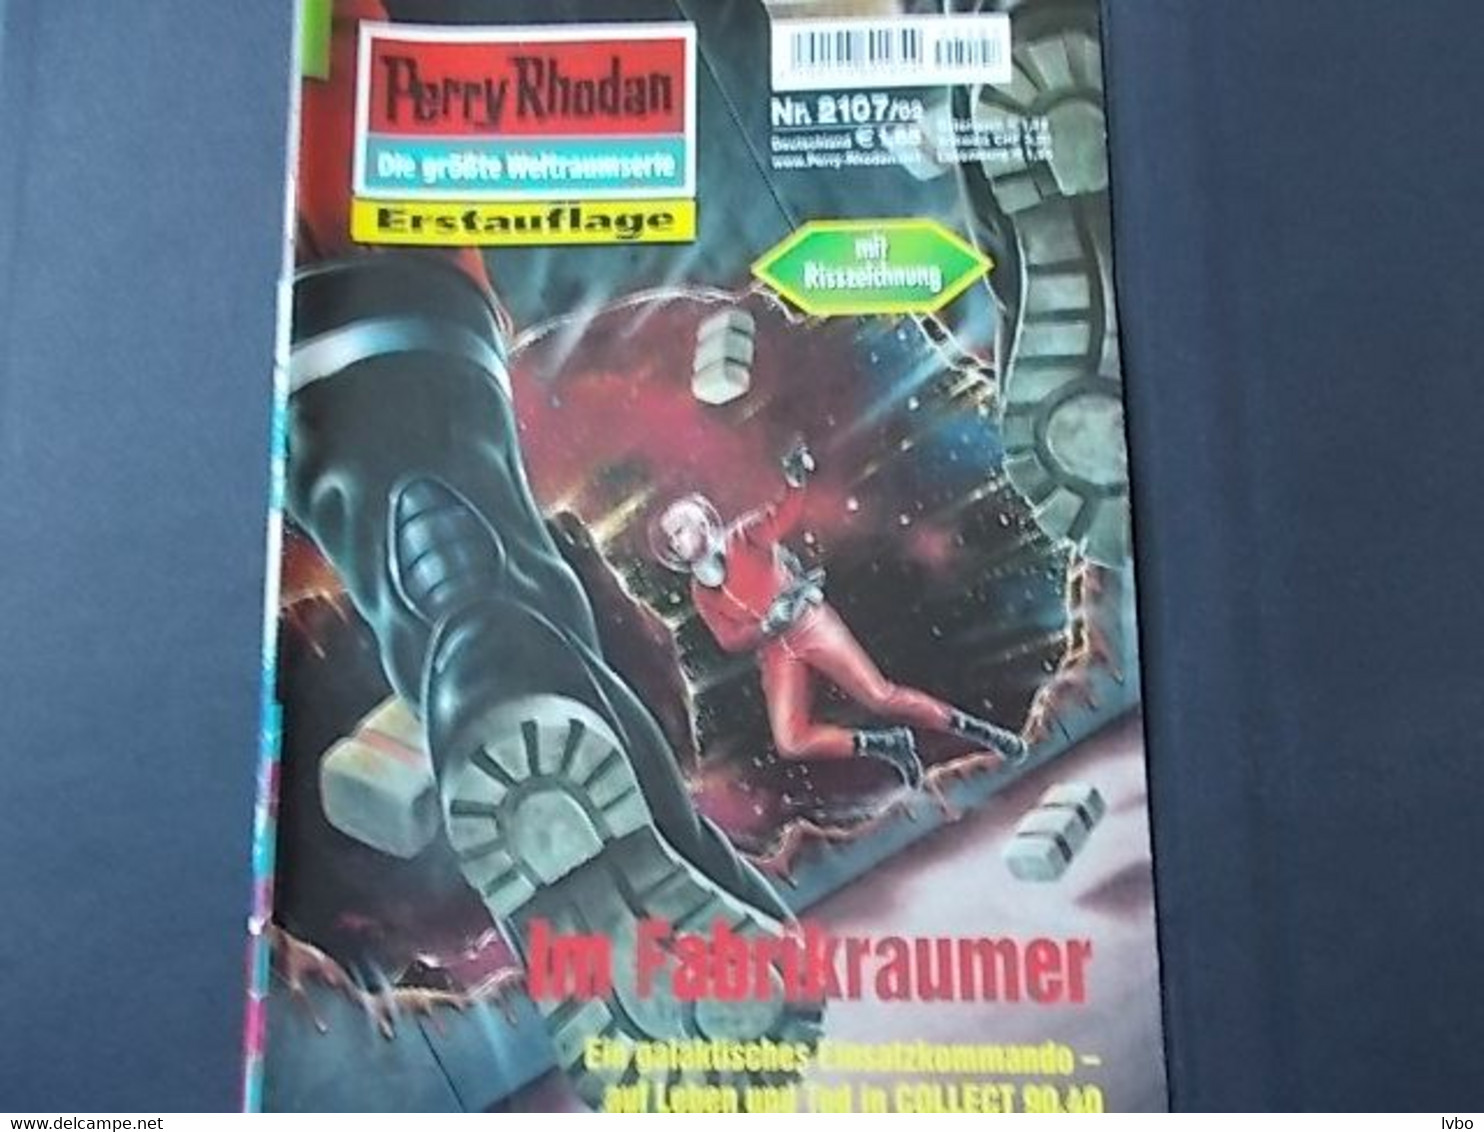 Perry Rhodan Nr 2107 Erstauflage Im Fabrikraumer - Science Fiction